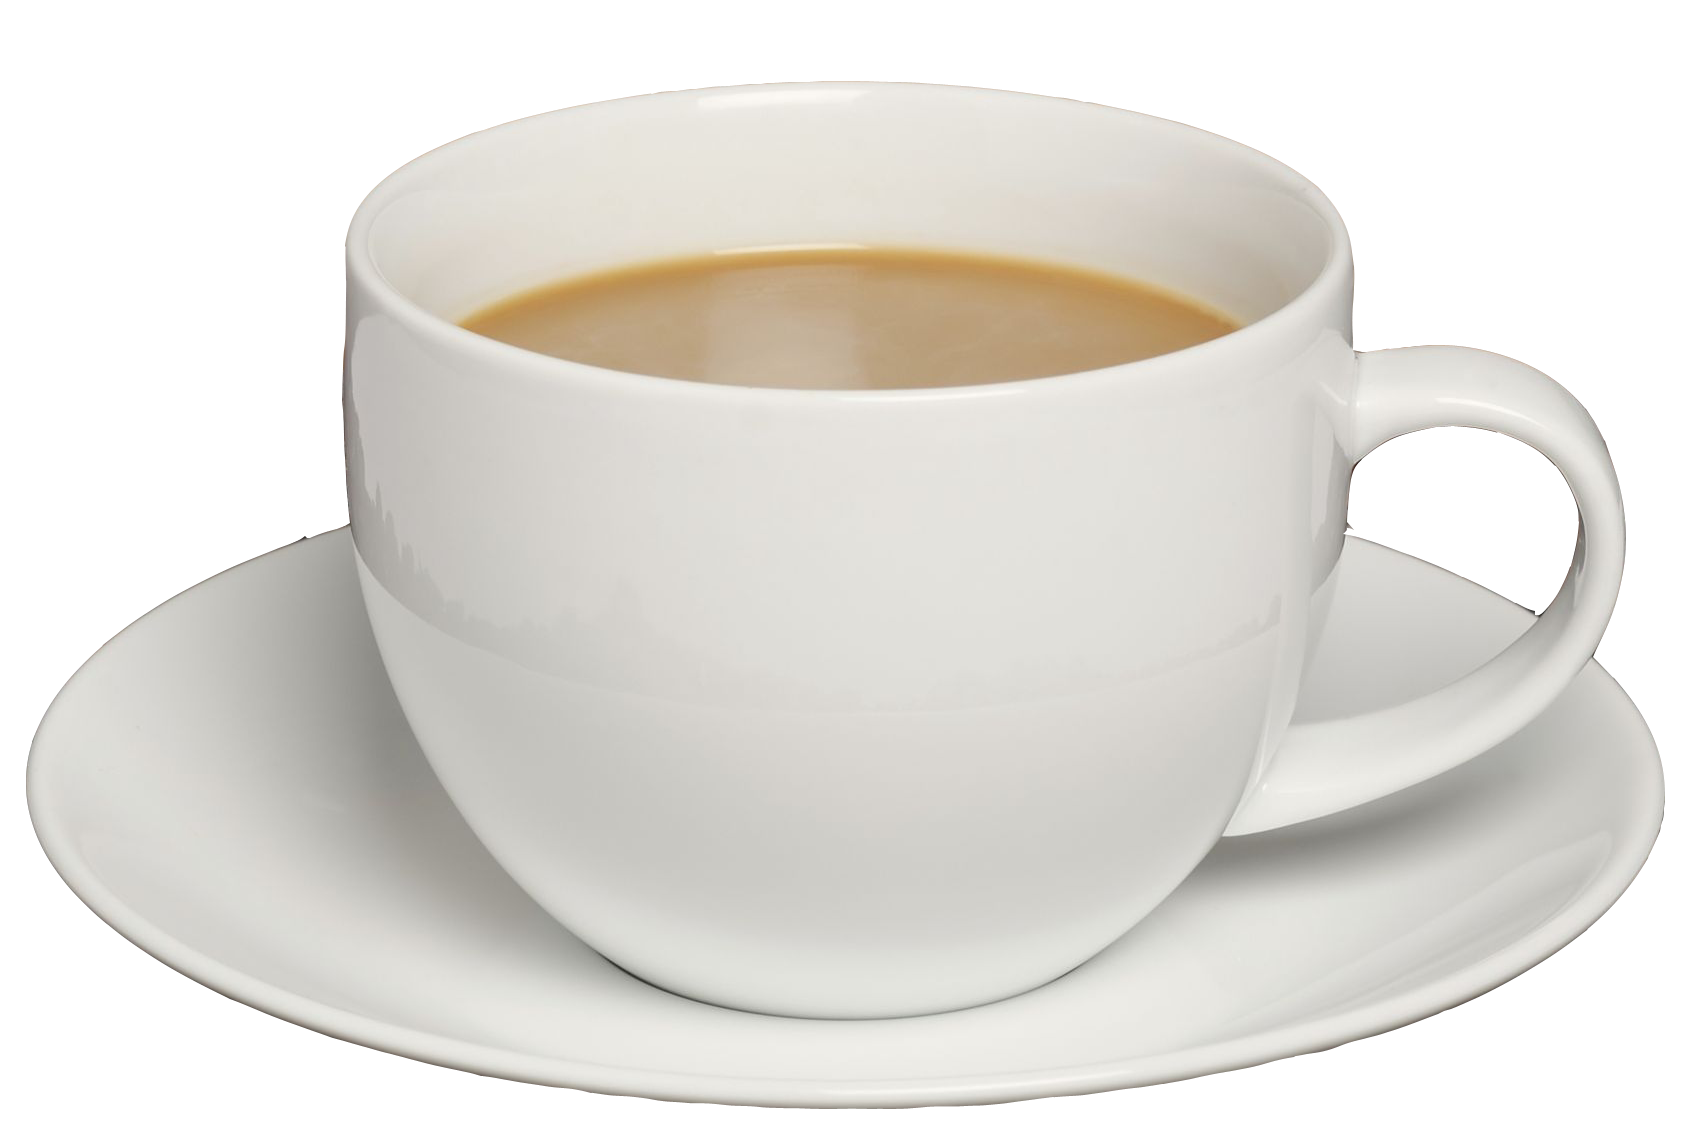 Mug Coffee Download Free PNG Clip Art